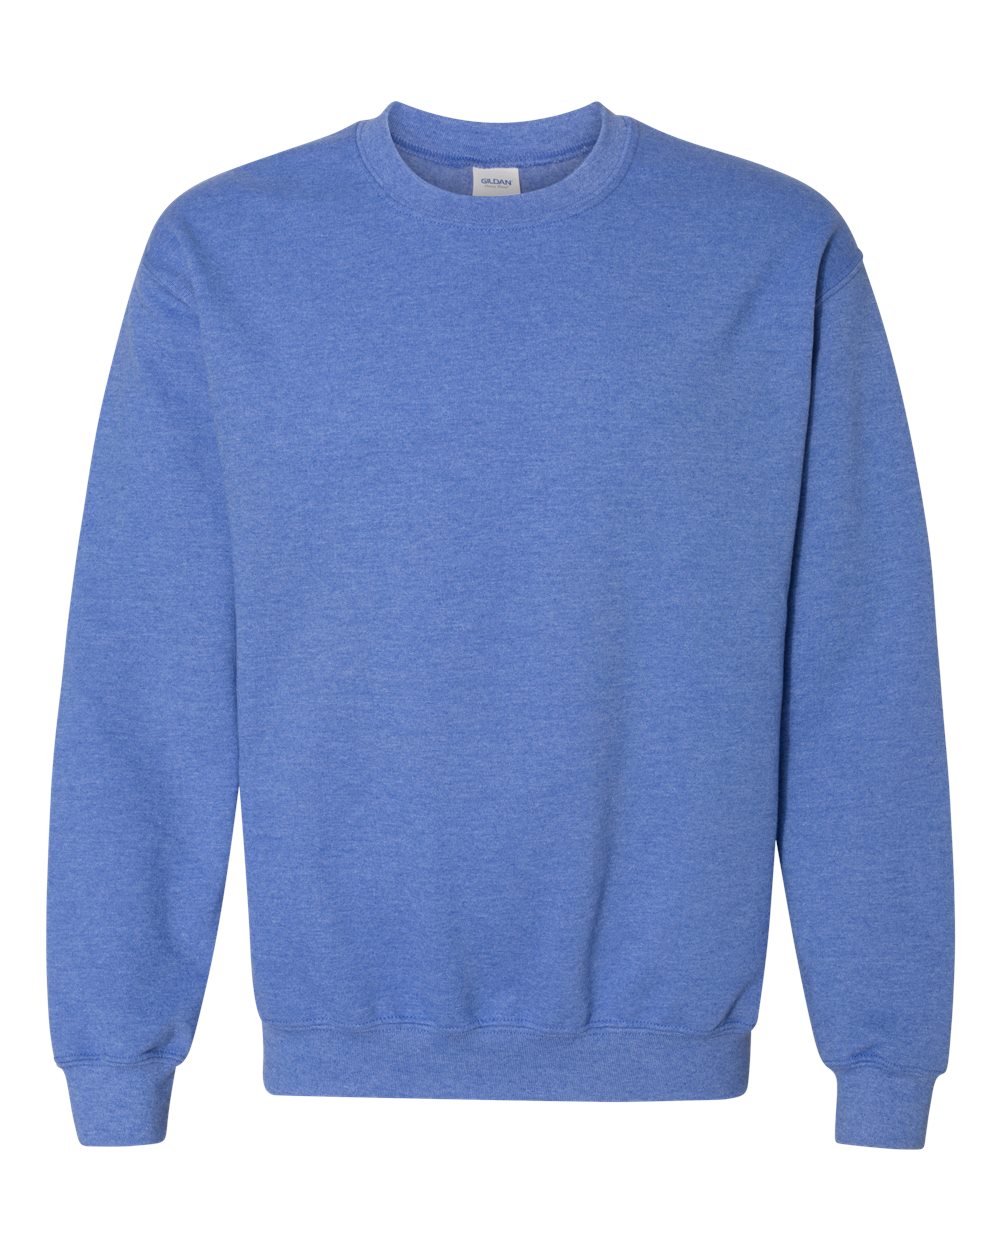 Sweatshirt Custom Order